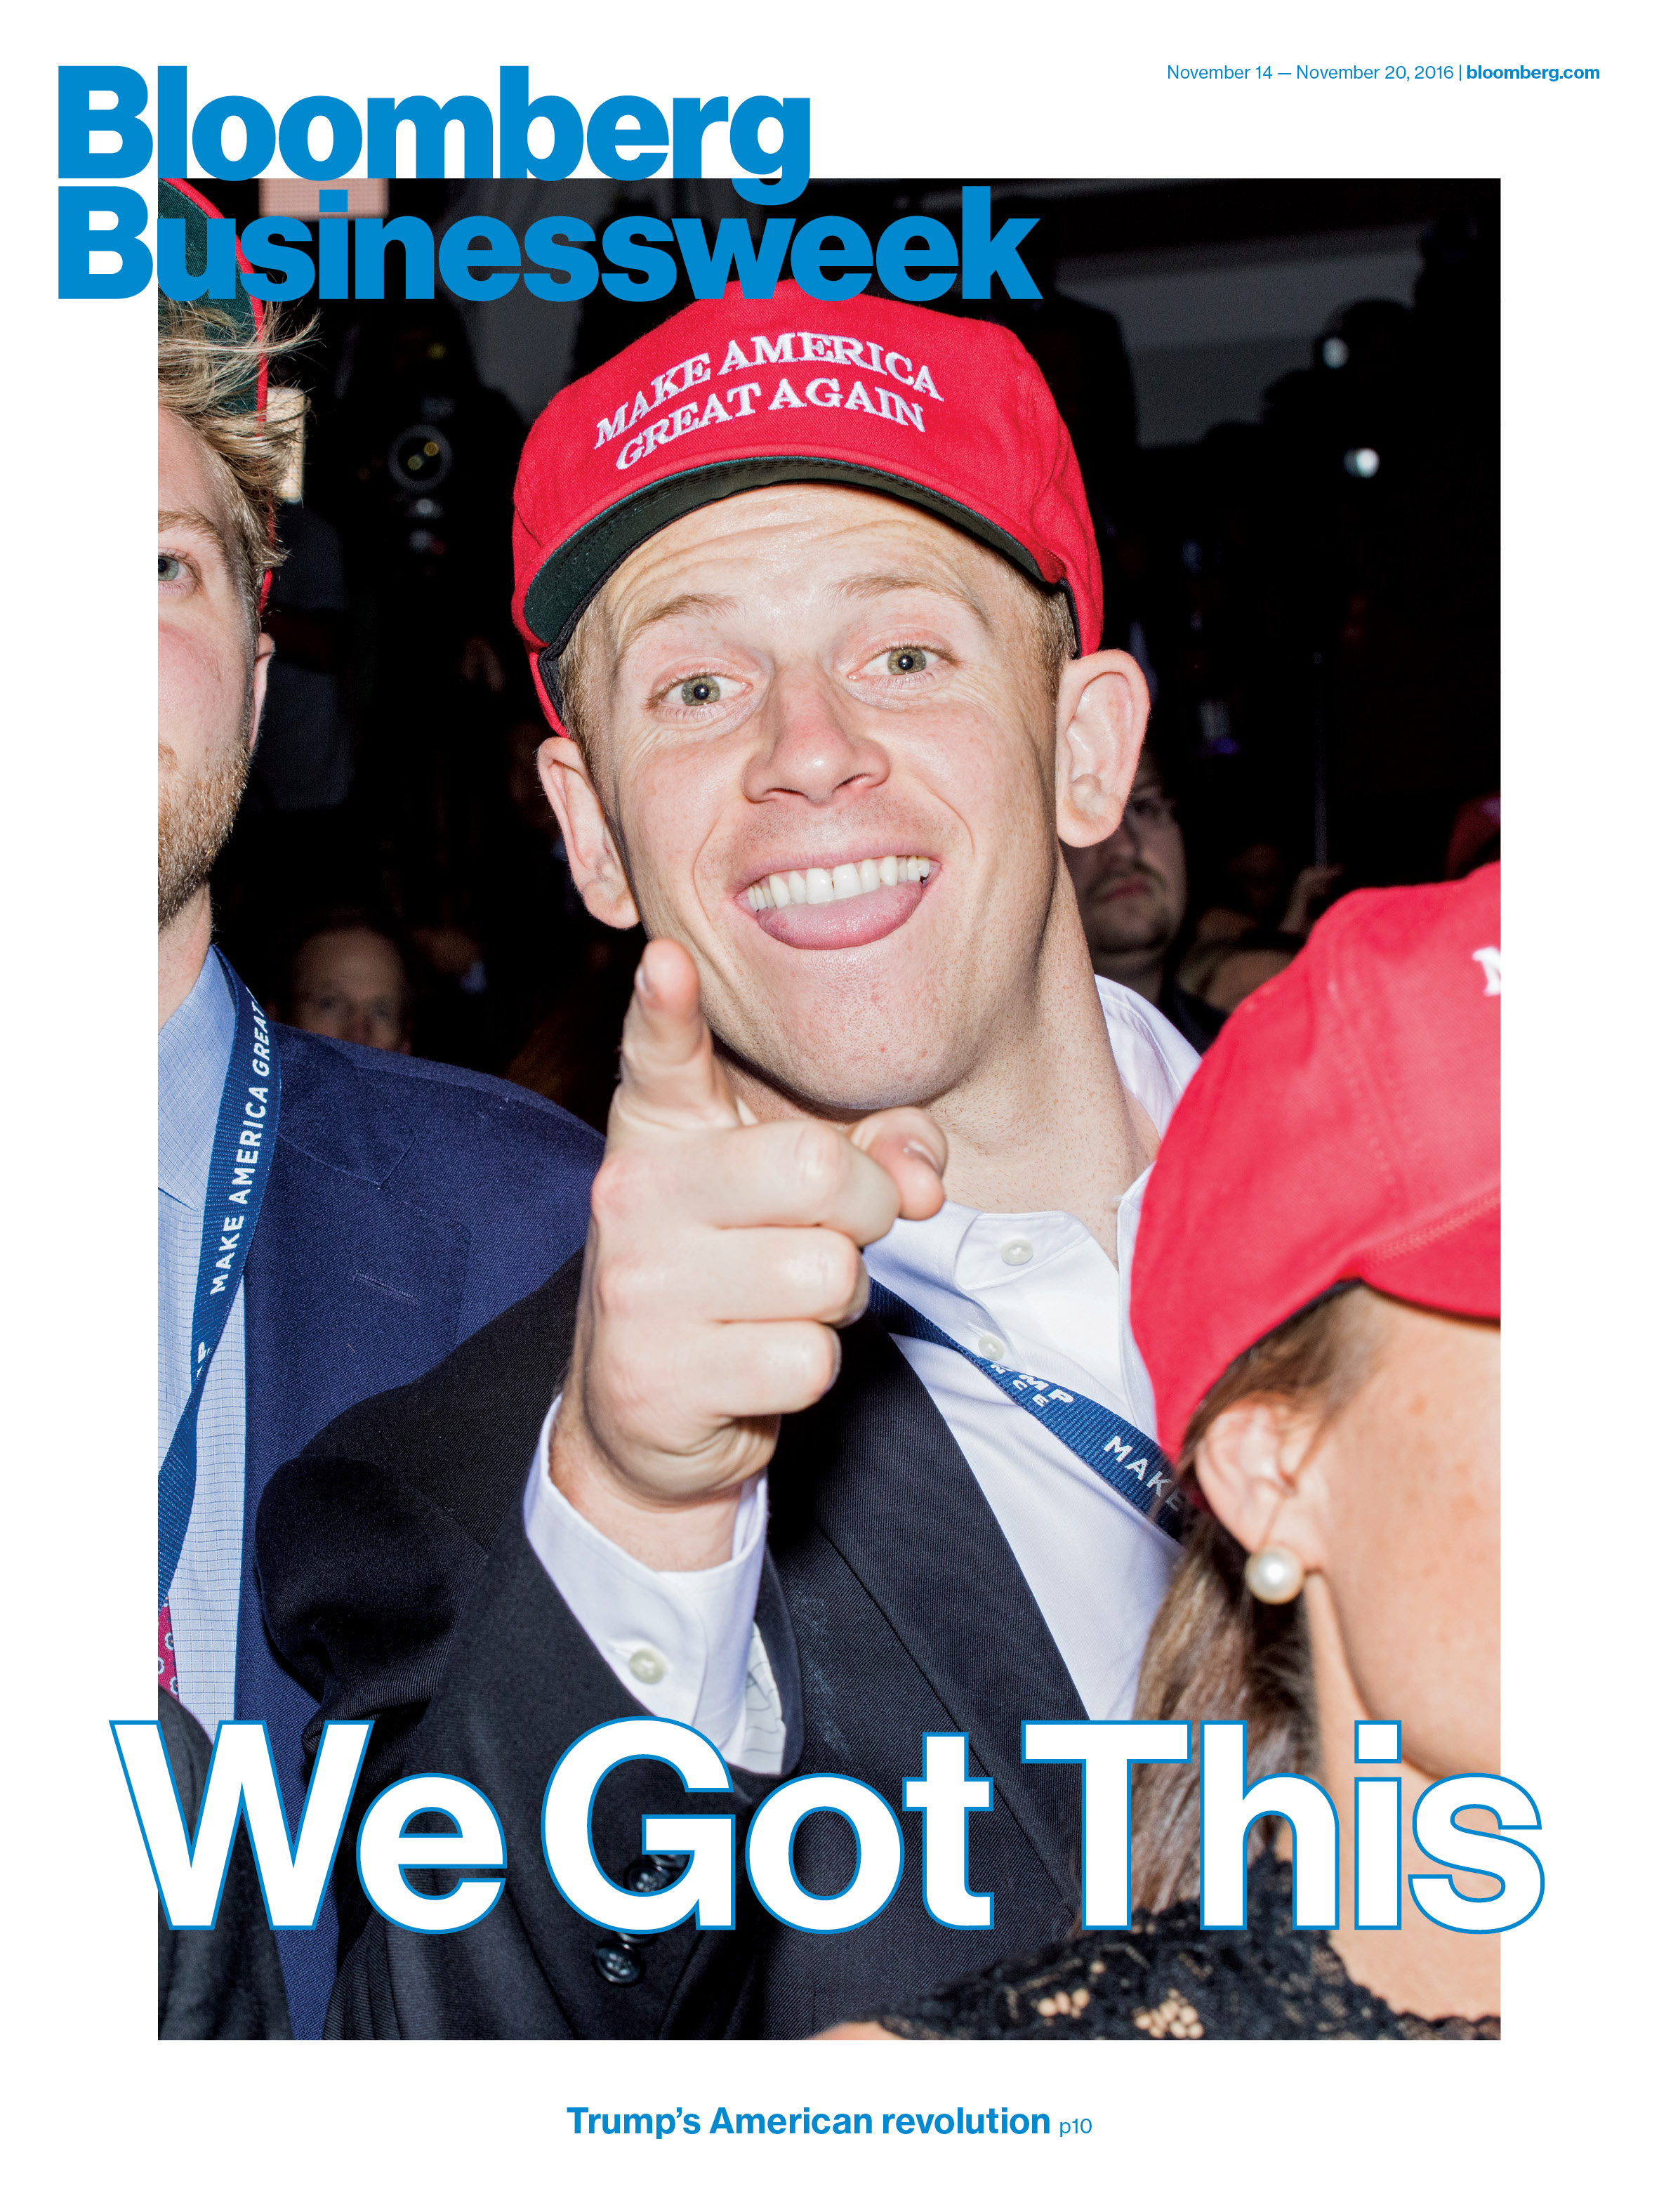 Bloomberg Businessweek - "We Got This. We Had This," November 14-20 split covers